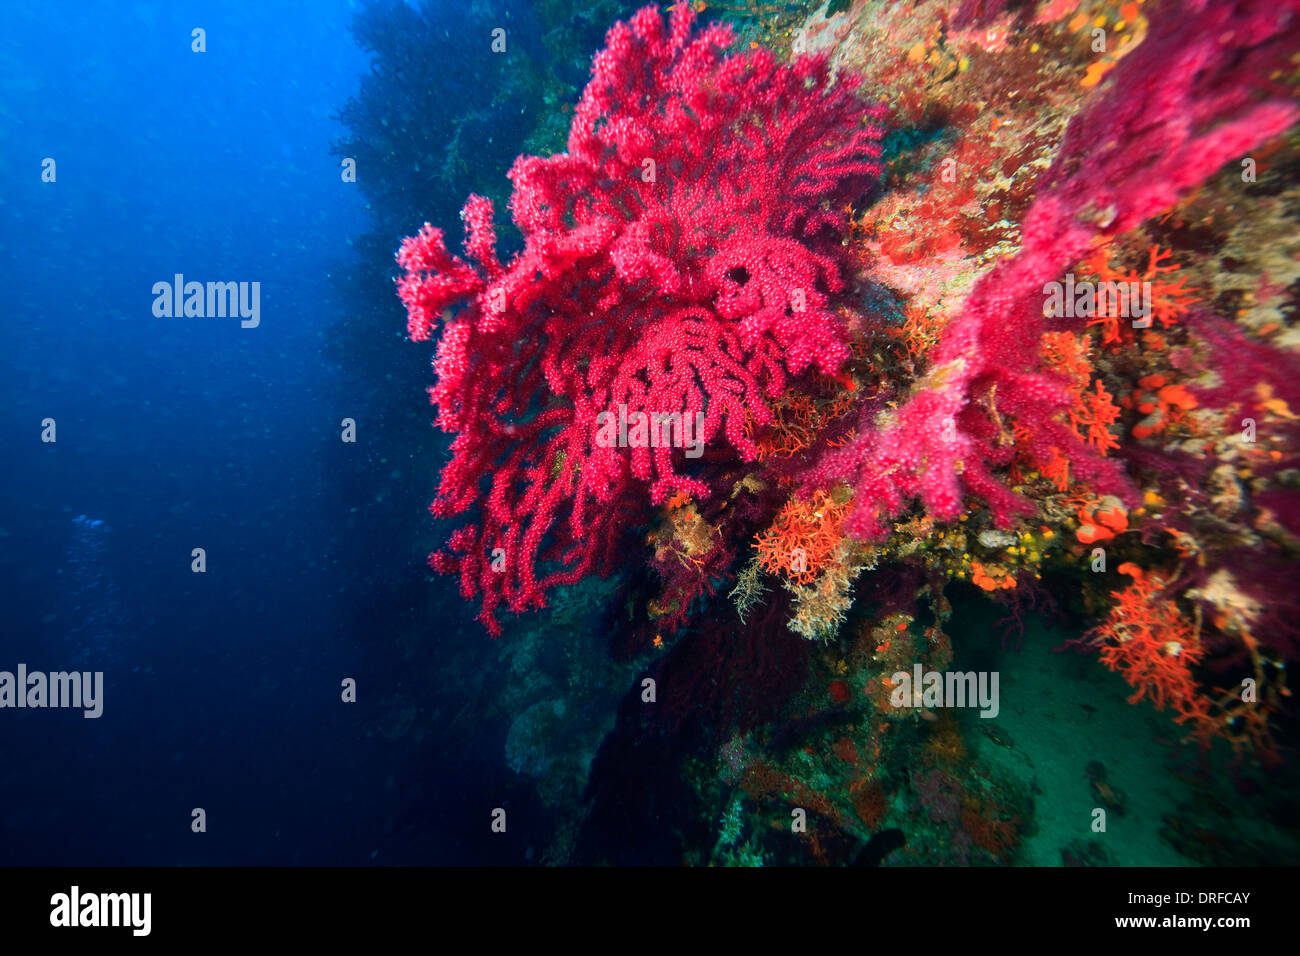 Red gorgonian sea fan, Adriatic Sea, Croatia, Europe Stock Photo